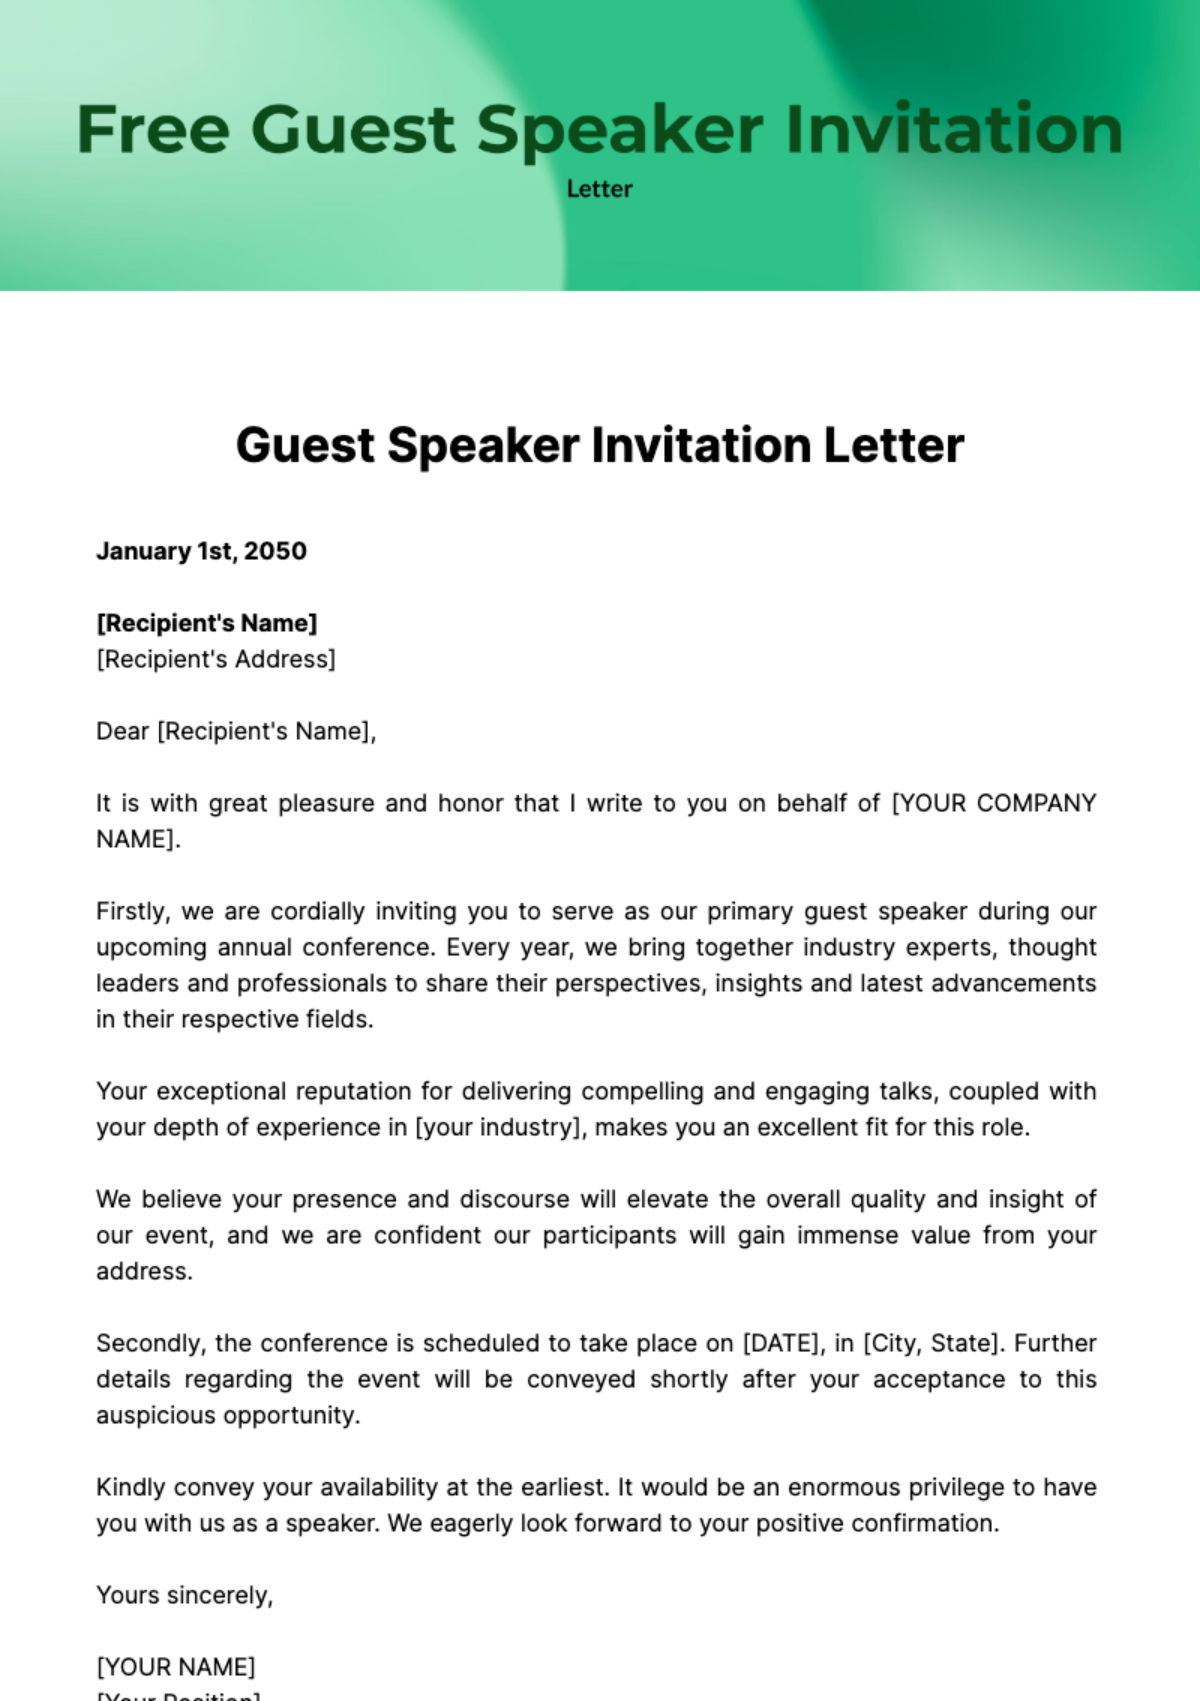 Free Guest Speaker Invitation Letter Template